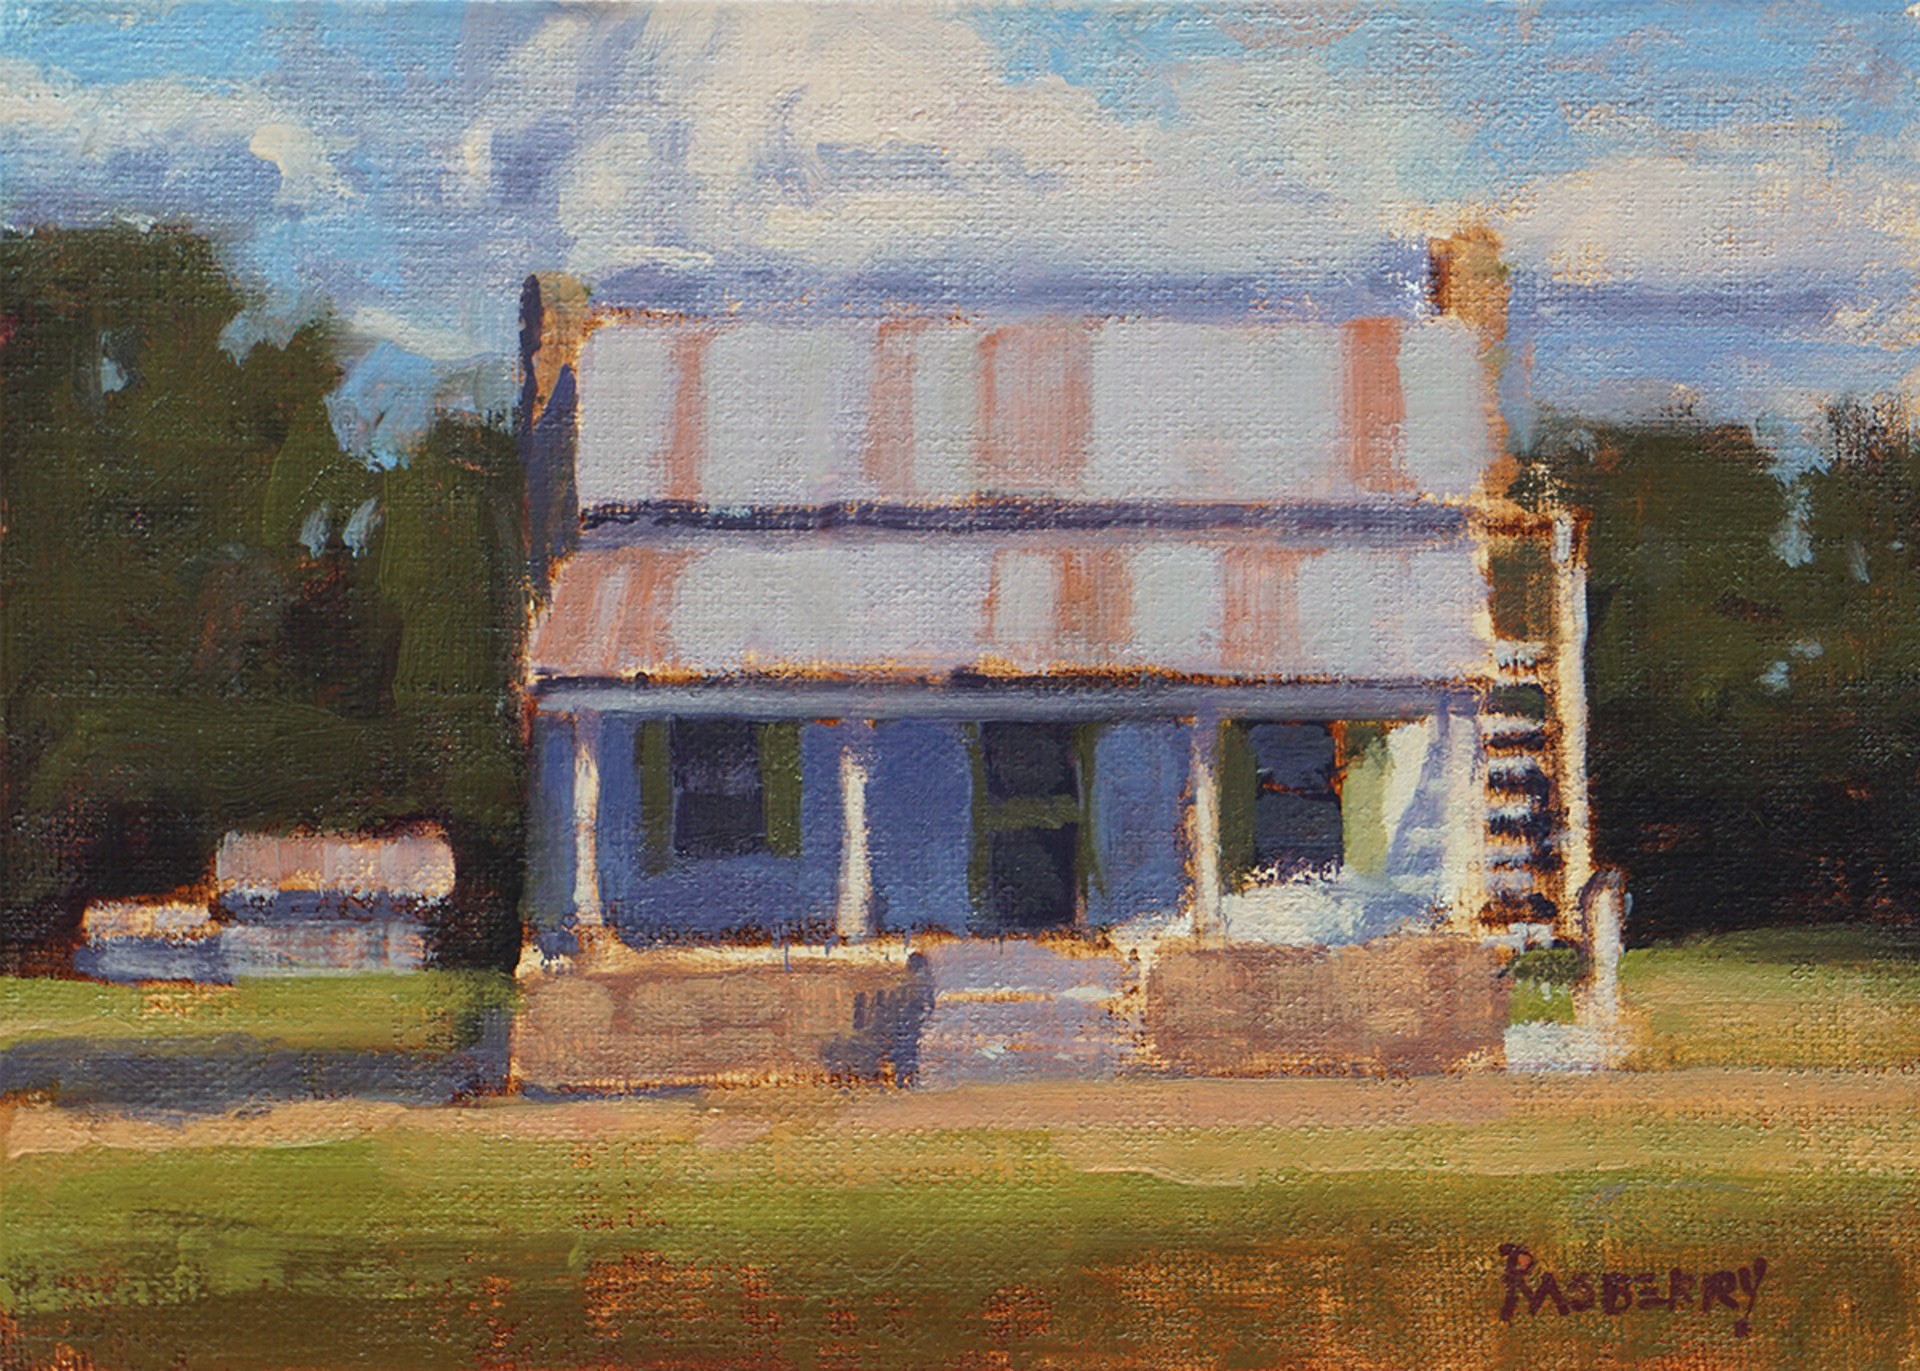 Little Farm House (Study) by John Rasberry